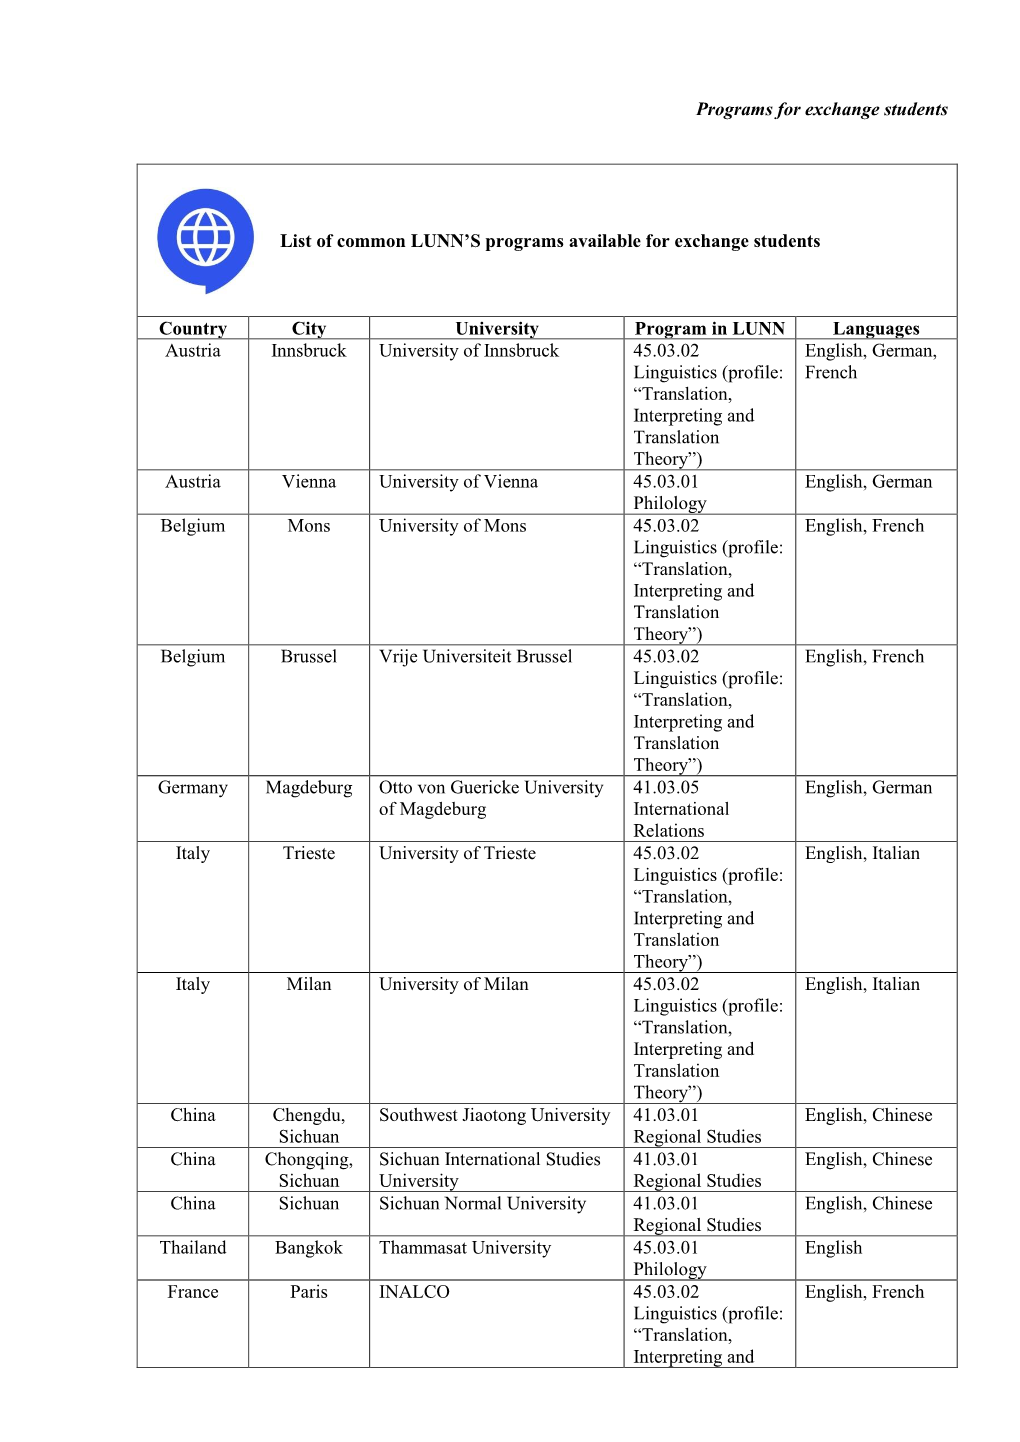 Programs for Exchange Students List of Common LUNN's Programs